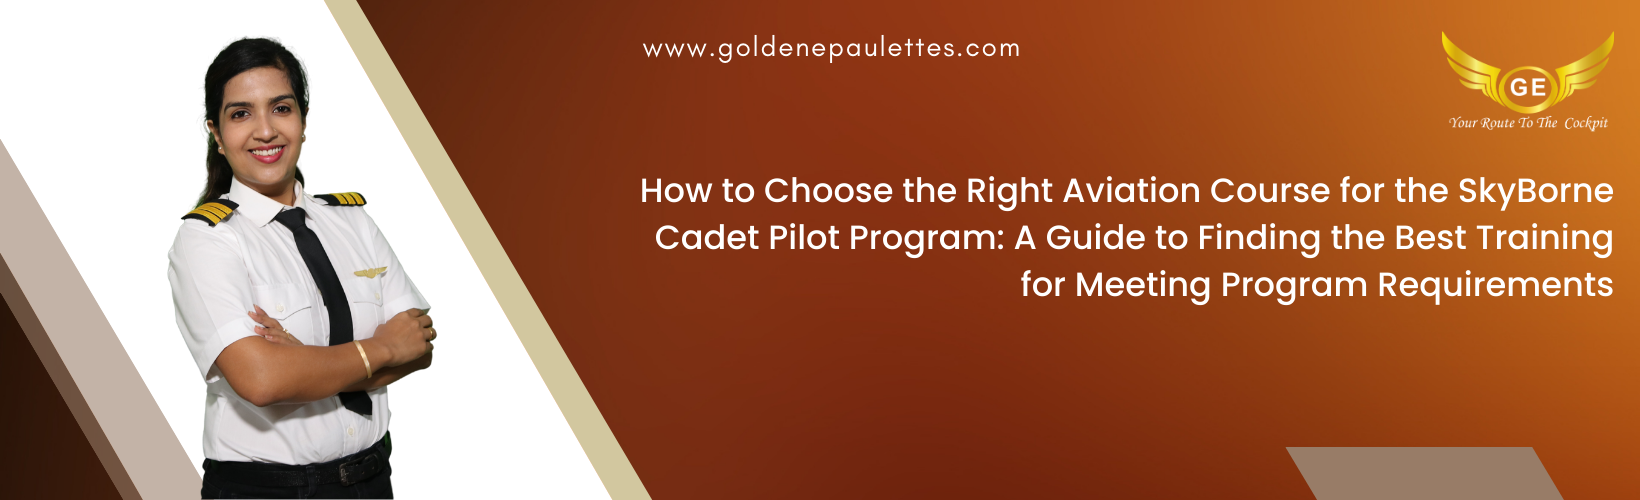 Choosing the Right Aviation Course for the SkyBorne Cadet Pilot Program